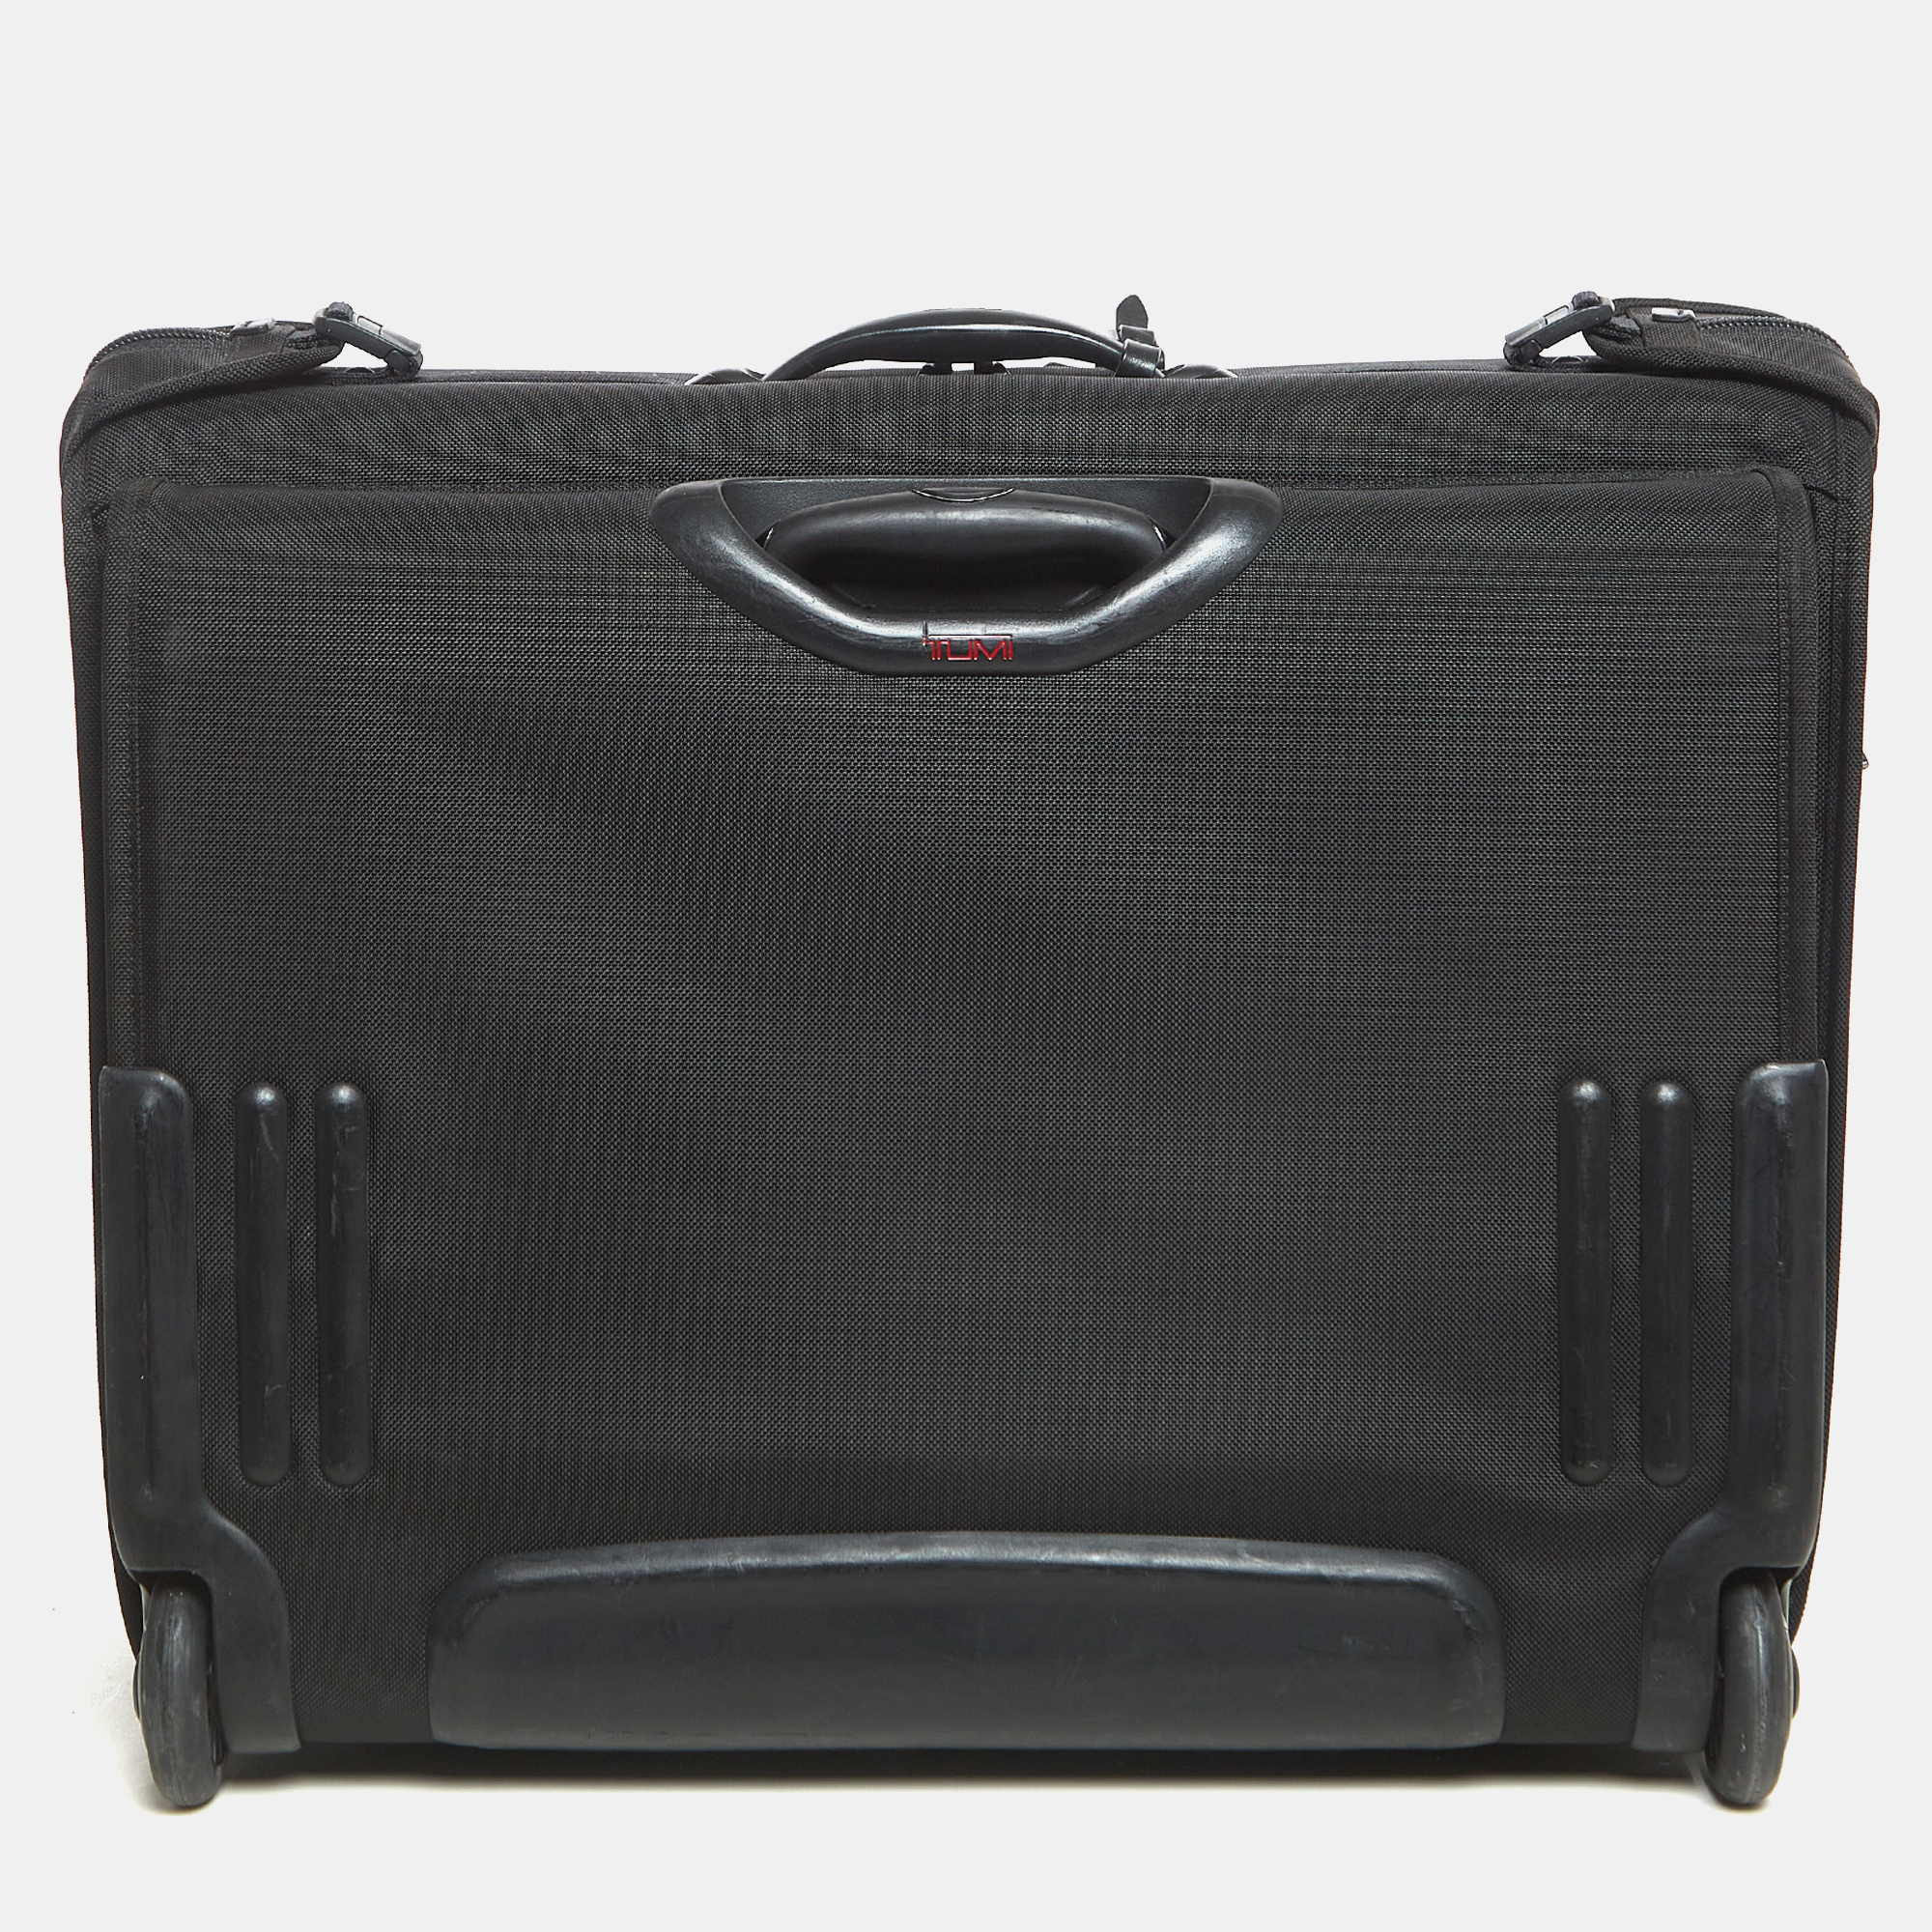 TUMI Black Nylon 2 Wheeled Alpha Classic Garment Luggage